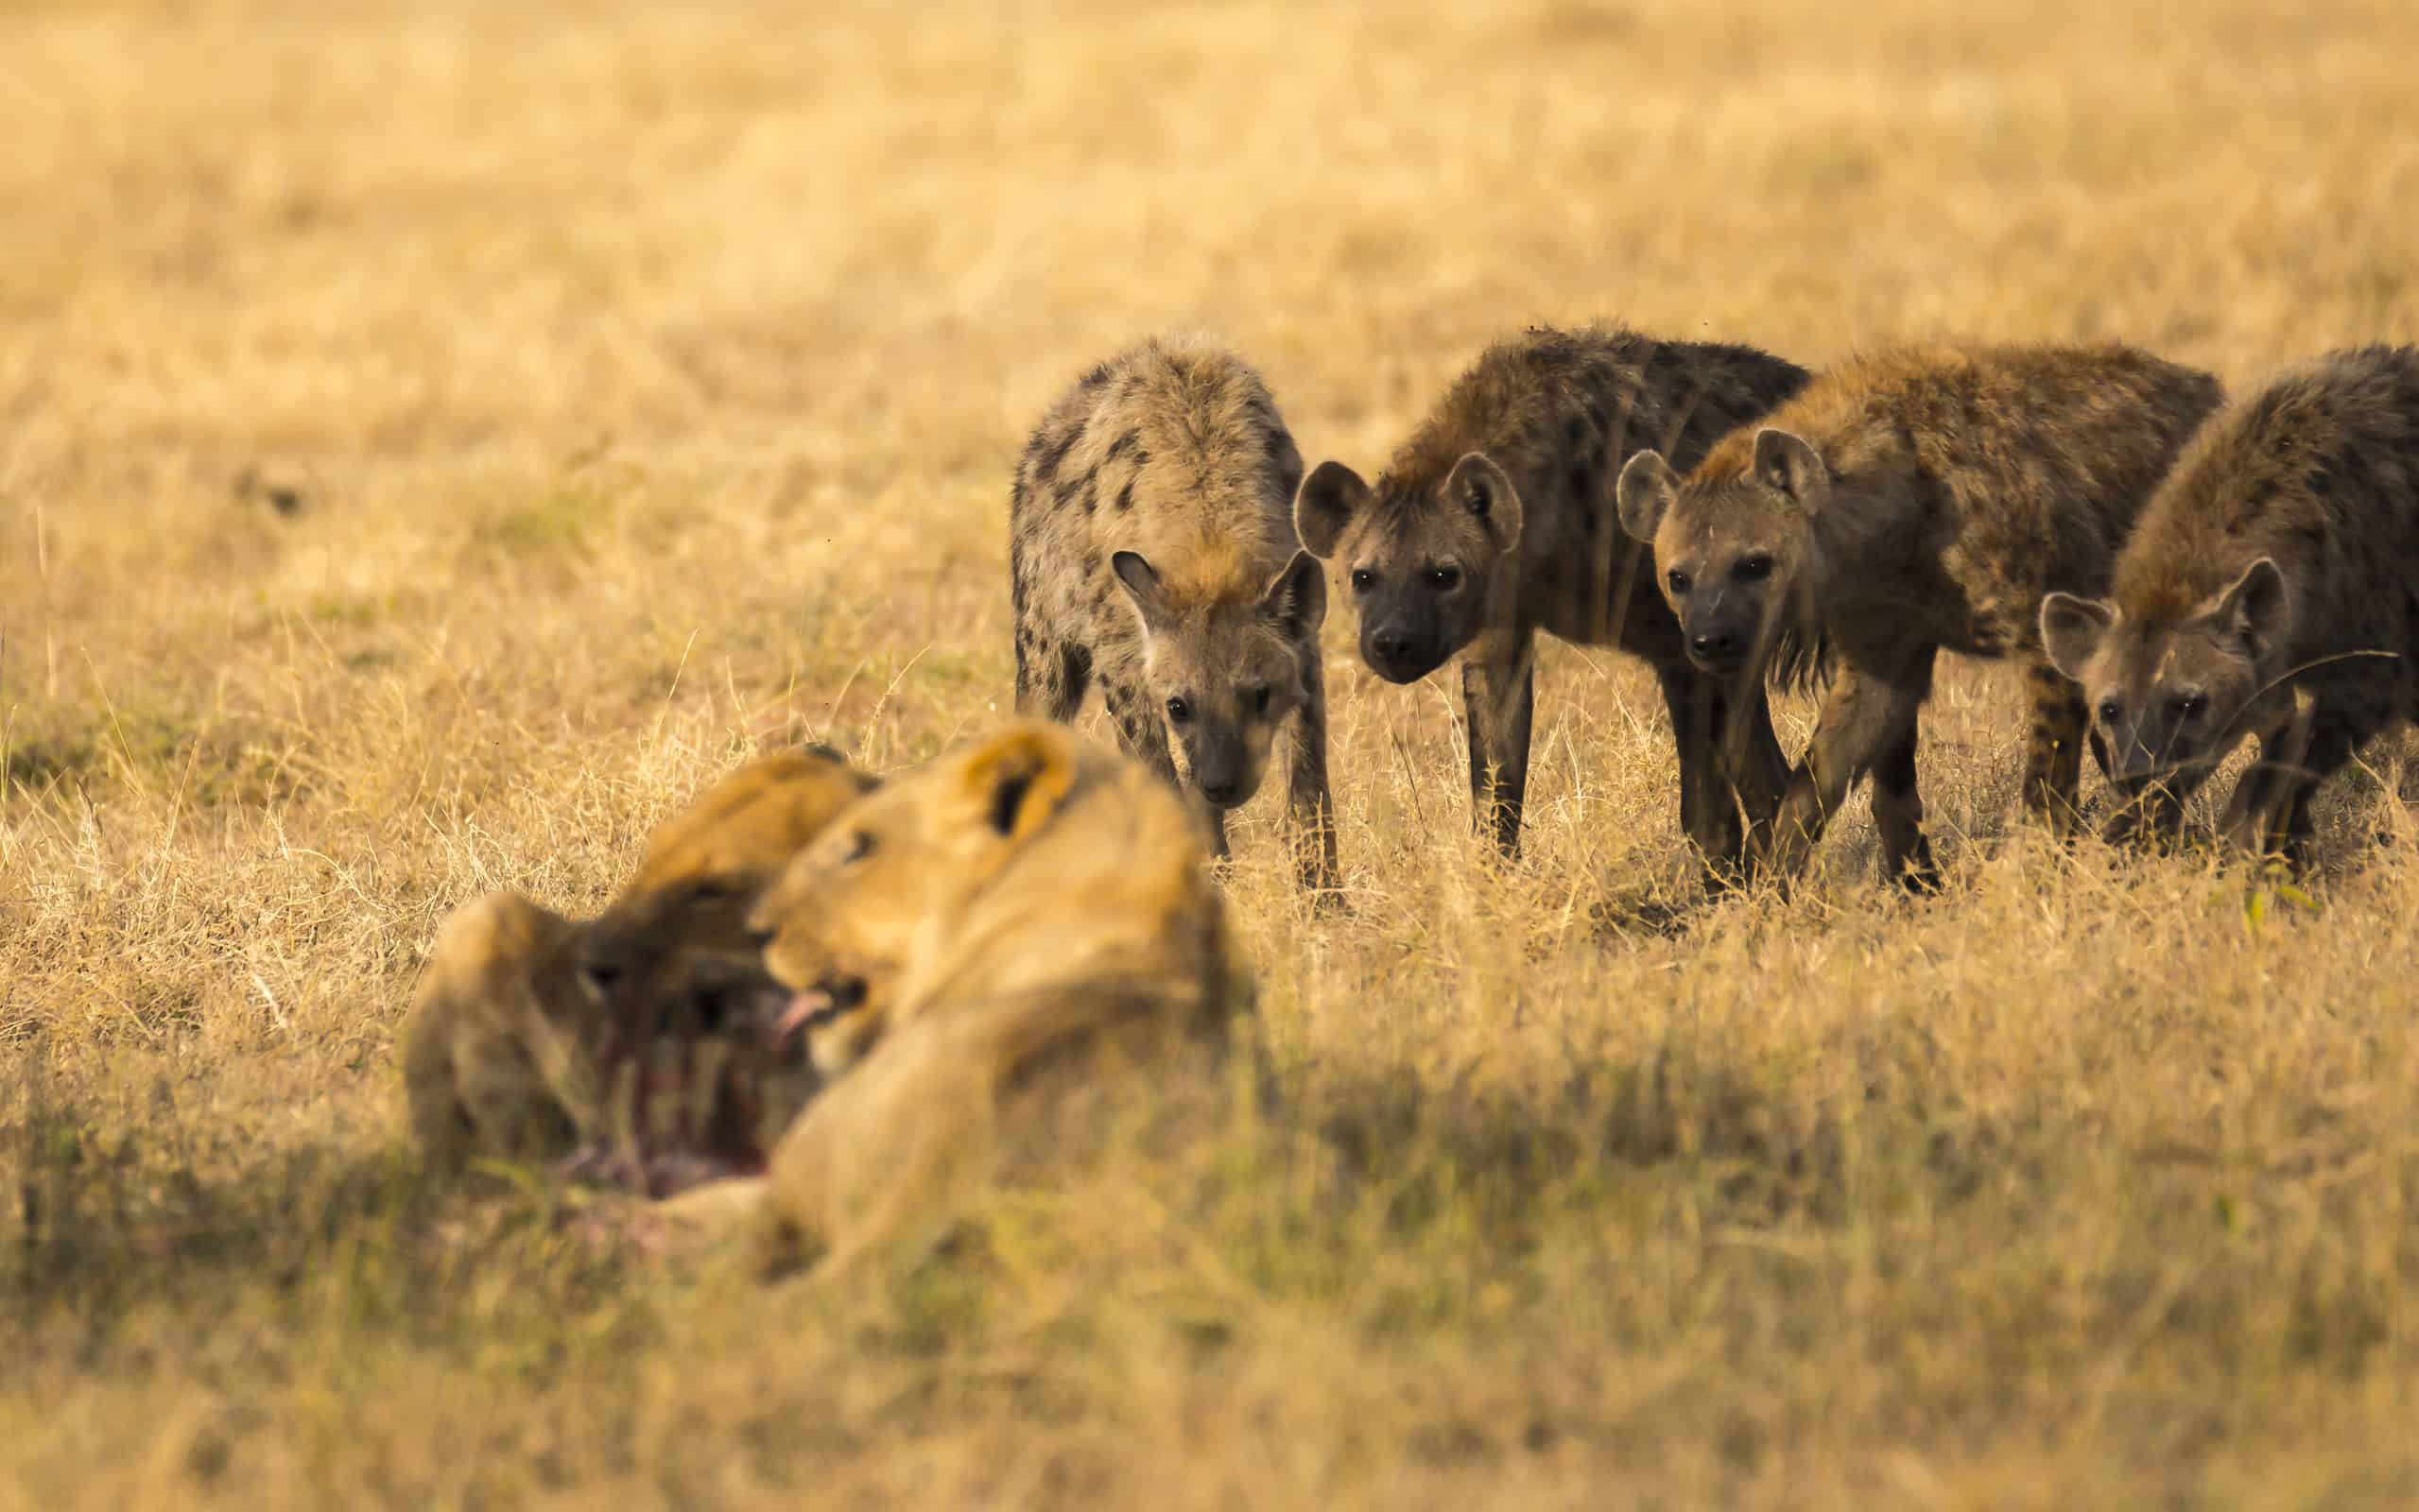 Hyenas versus lions